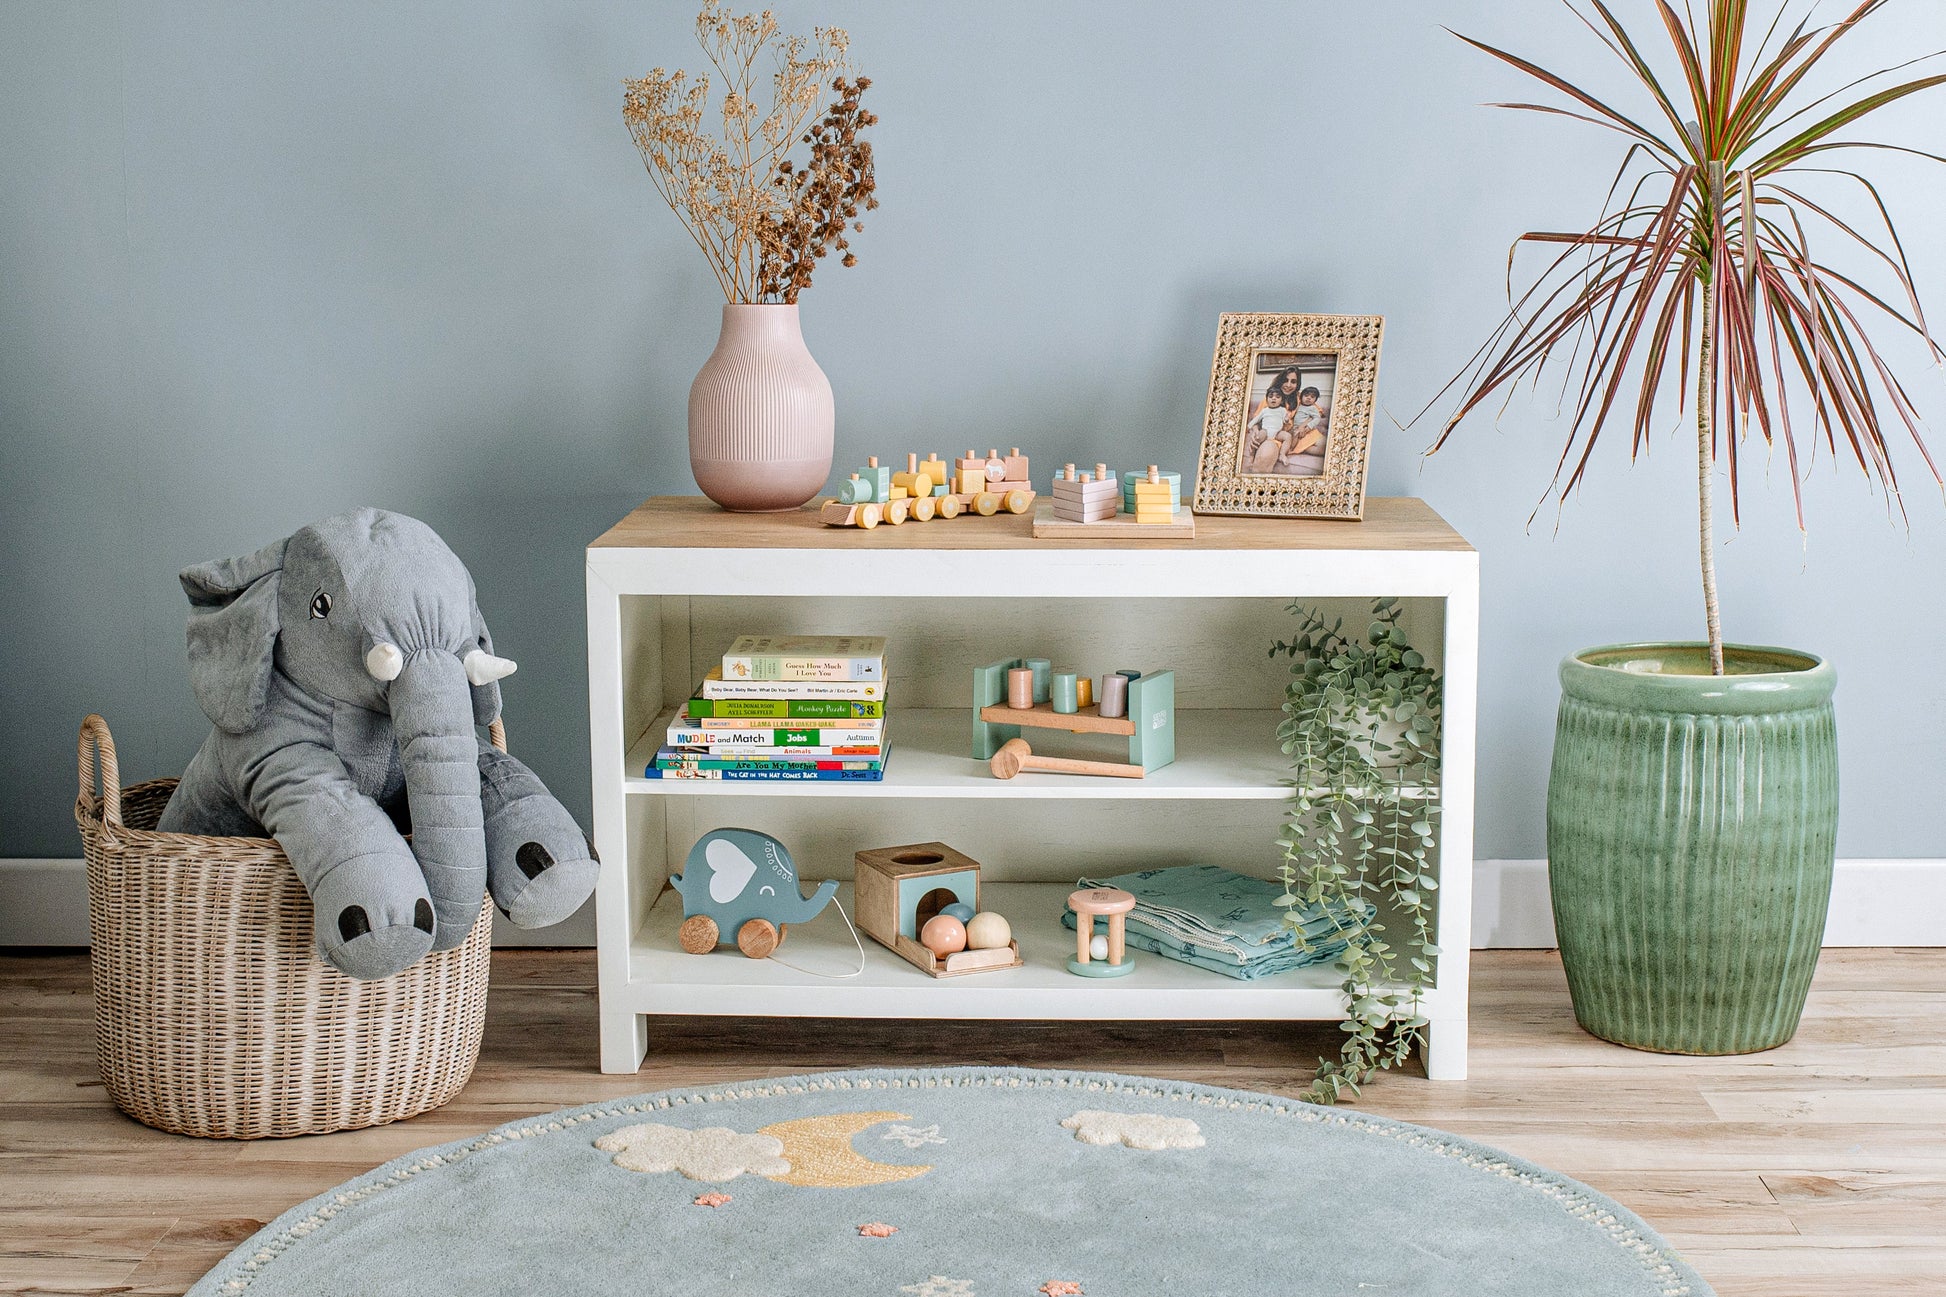 Buy Montessori Wooden Storage Unit - White Duco Online - SkilloToys.com